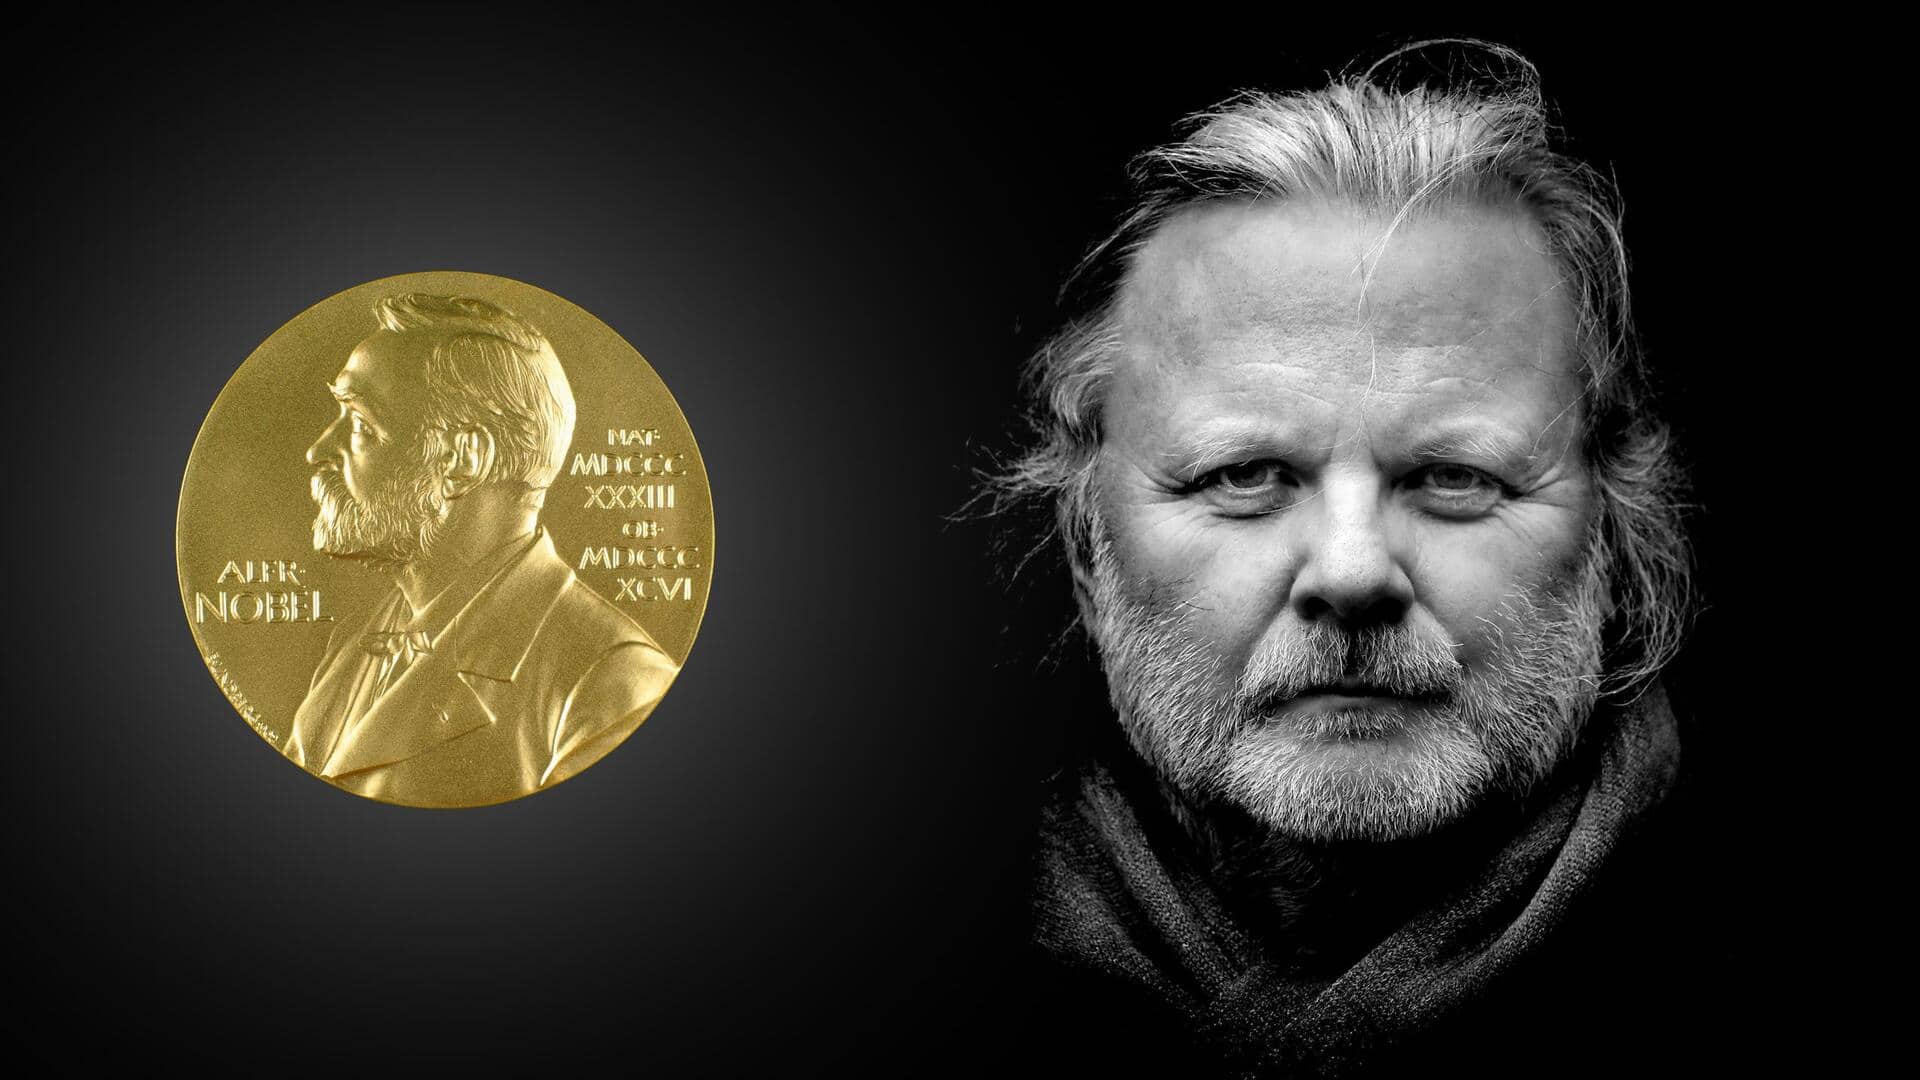 Nobel Prize in Literature awarded to Norwegian author Jon Fosse